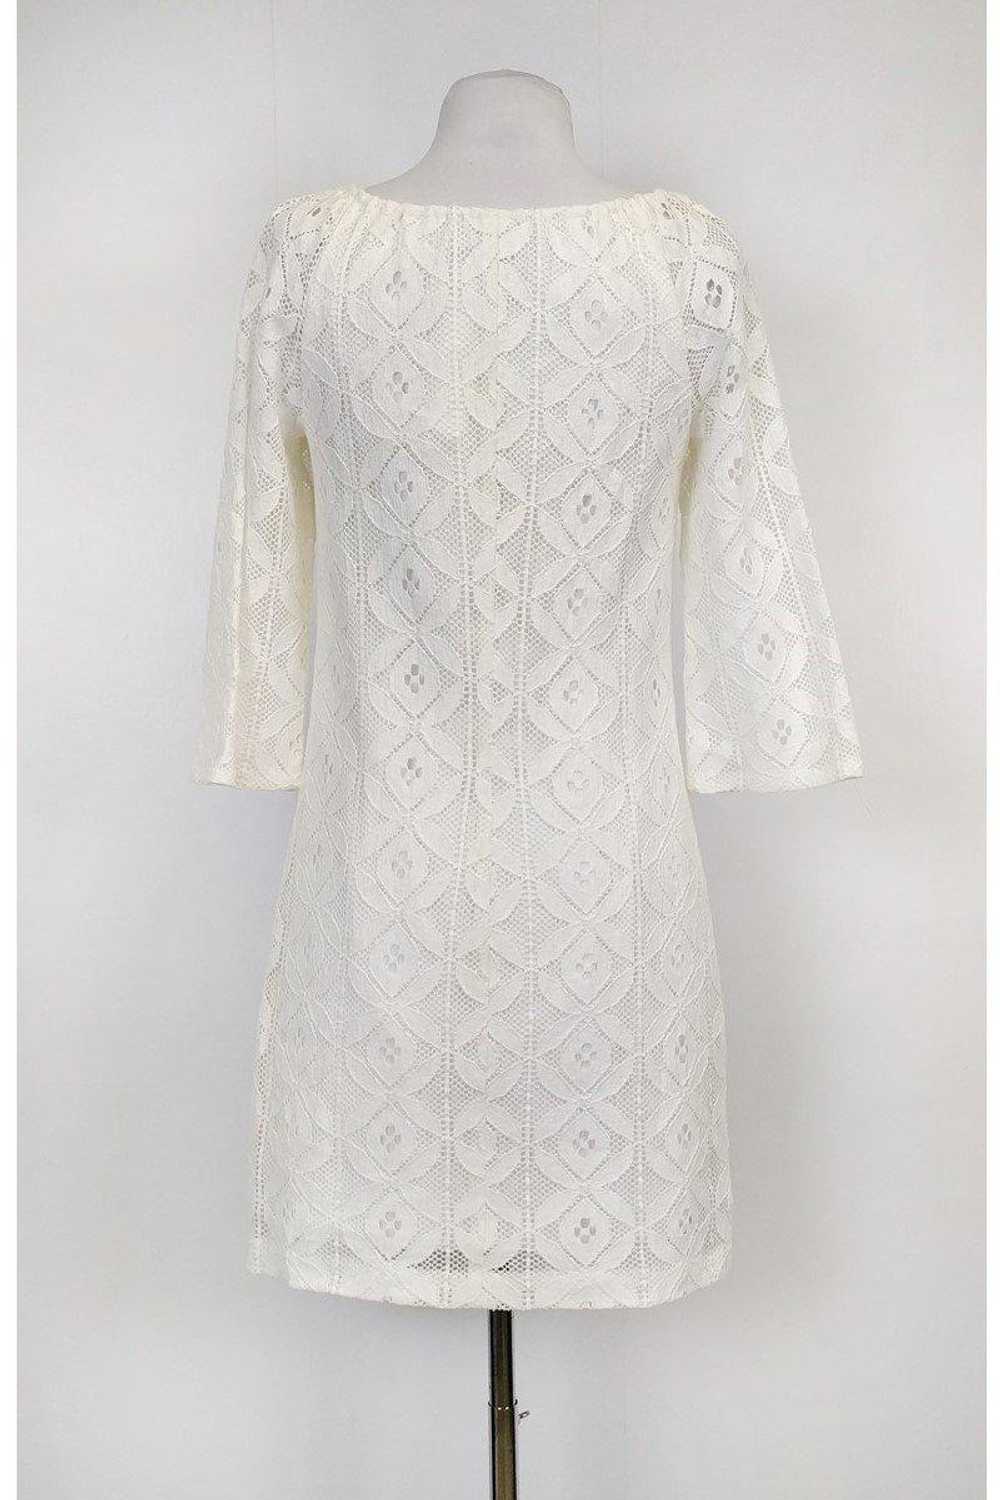 Trina Turk - White Lace Dress Sz 0 - image 3